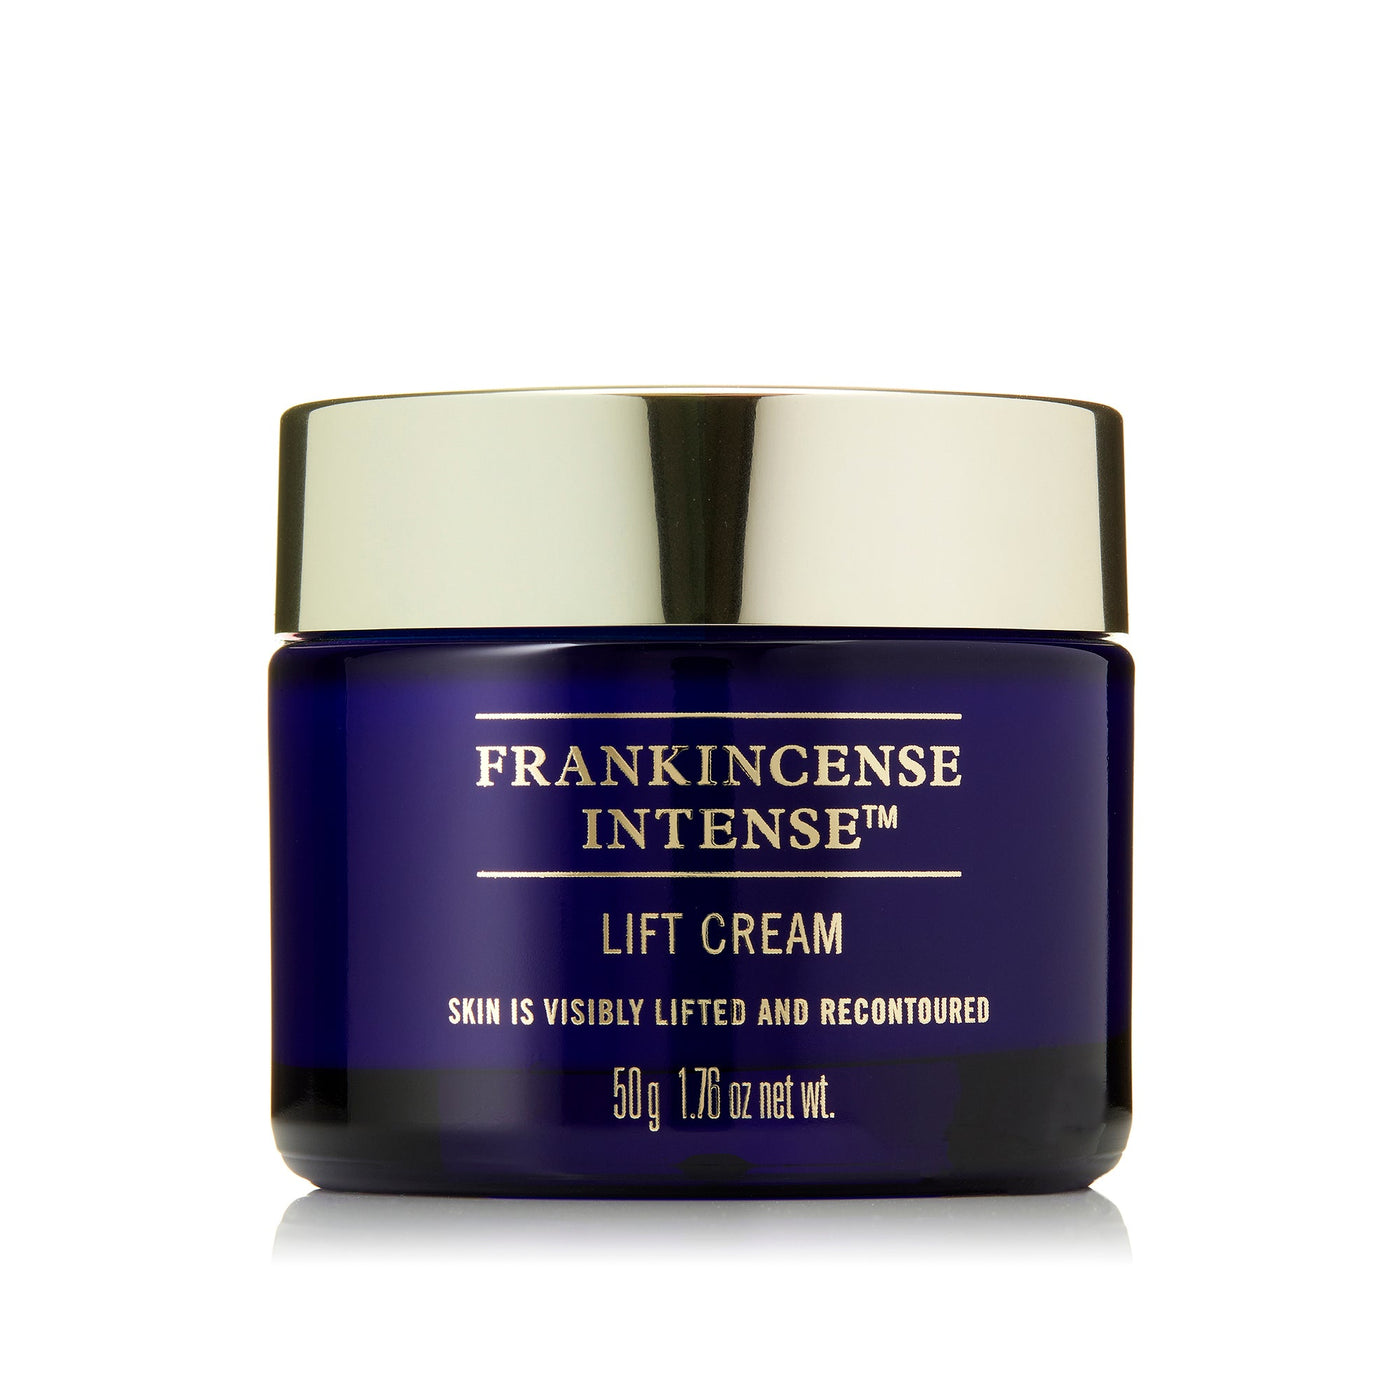 frankincense-intense-lift-cream-2384-high-res-2000px.jpg